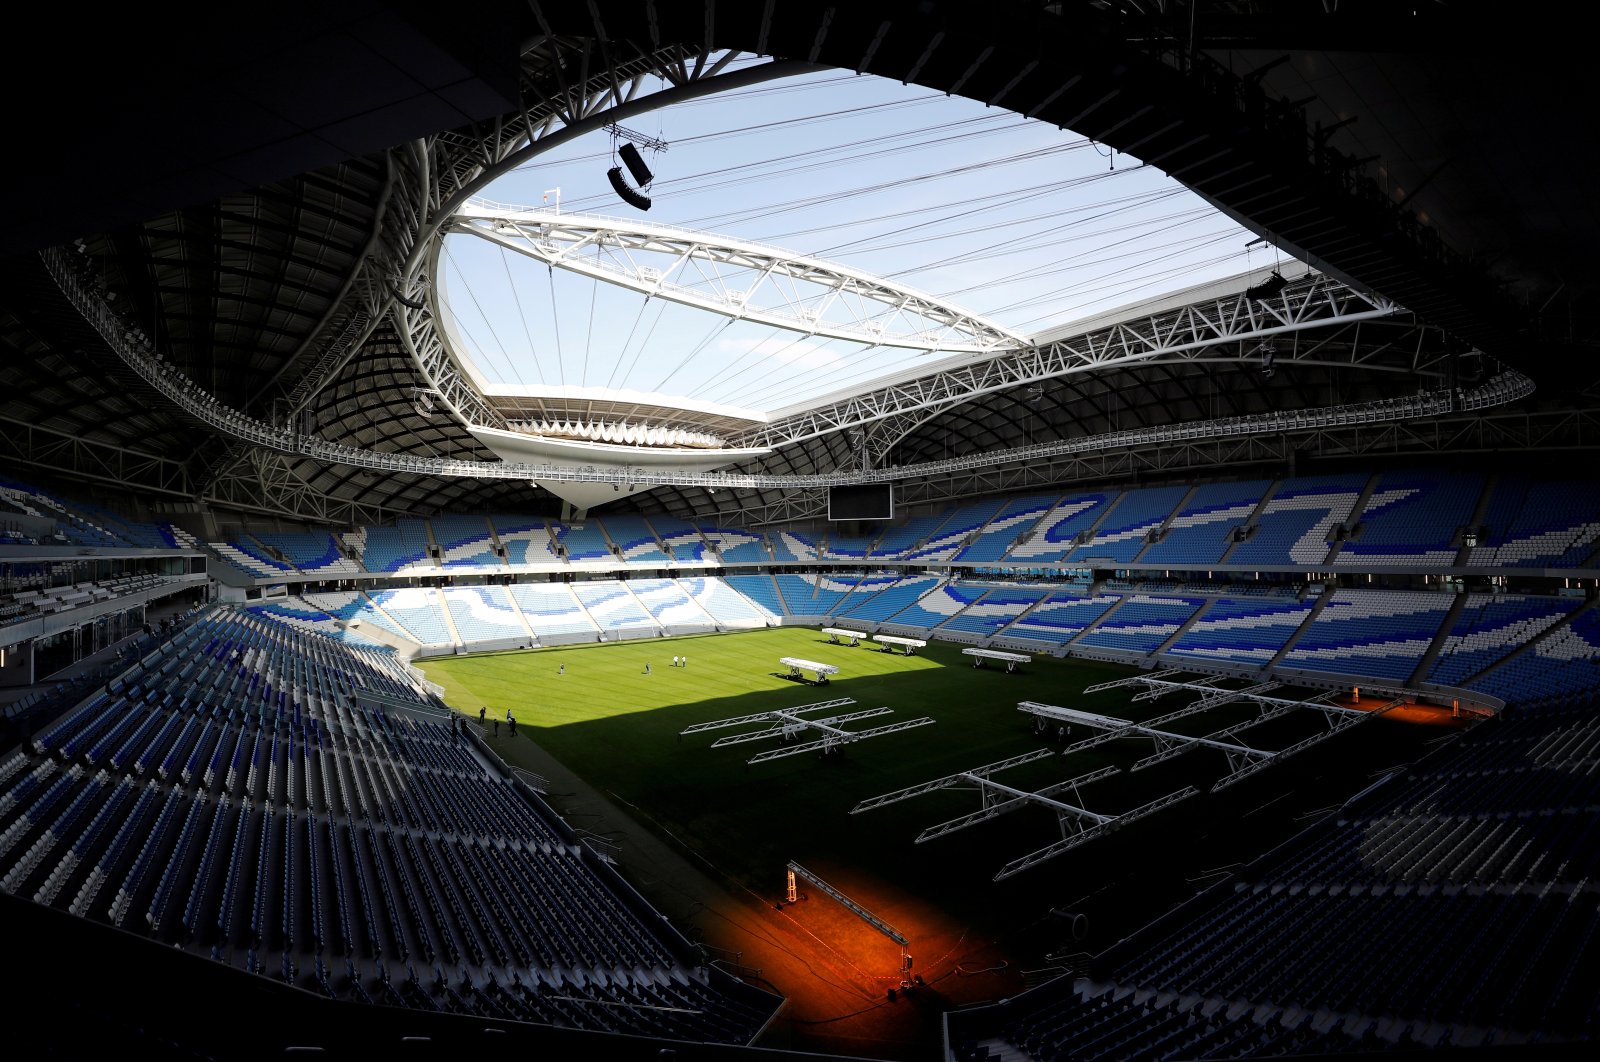 A view of the Al Janoub Stadium built for the upcoming 2022 FIFA World Cup, Al Wakrah, Qatar, Dec. 16, 2019. (Reuters Photo)